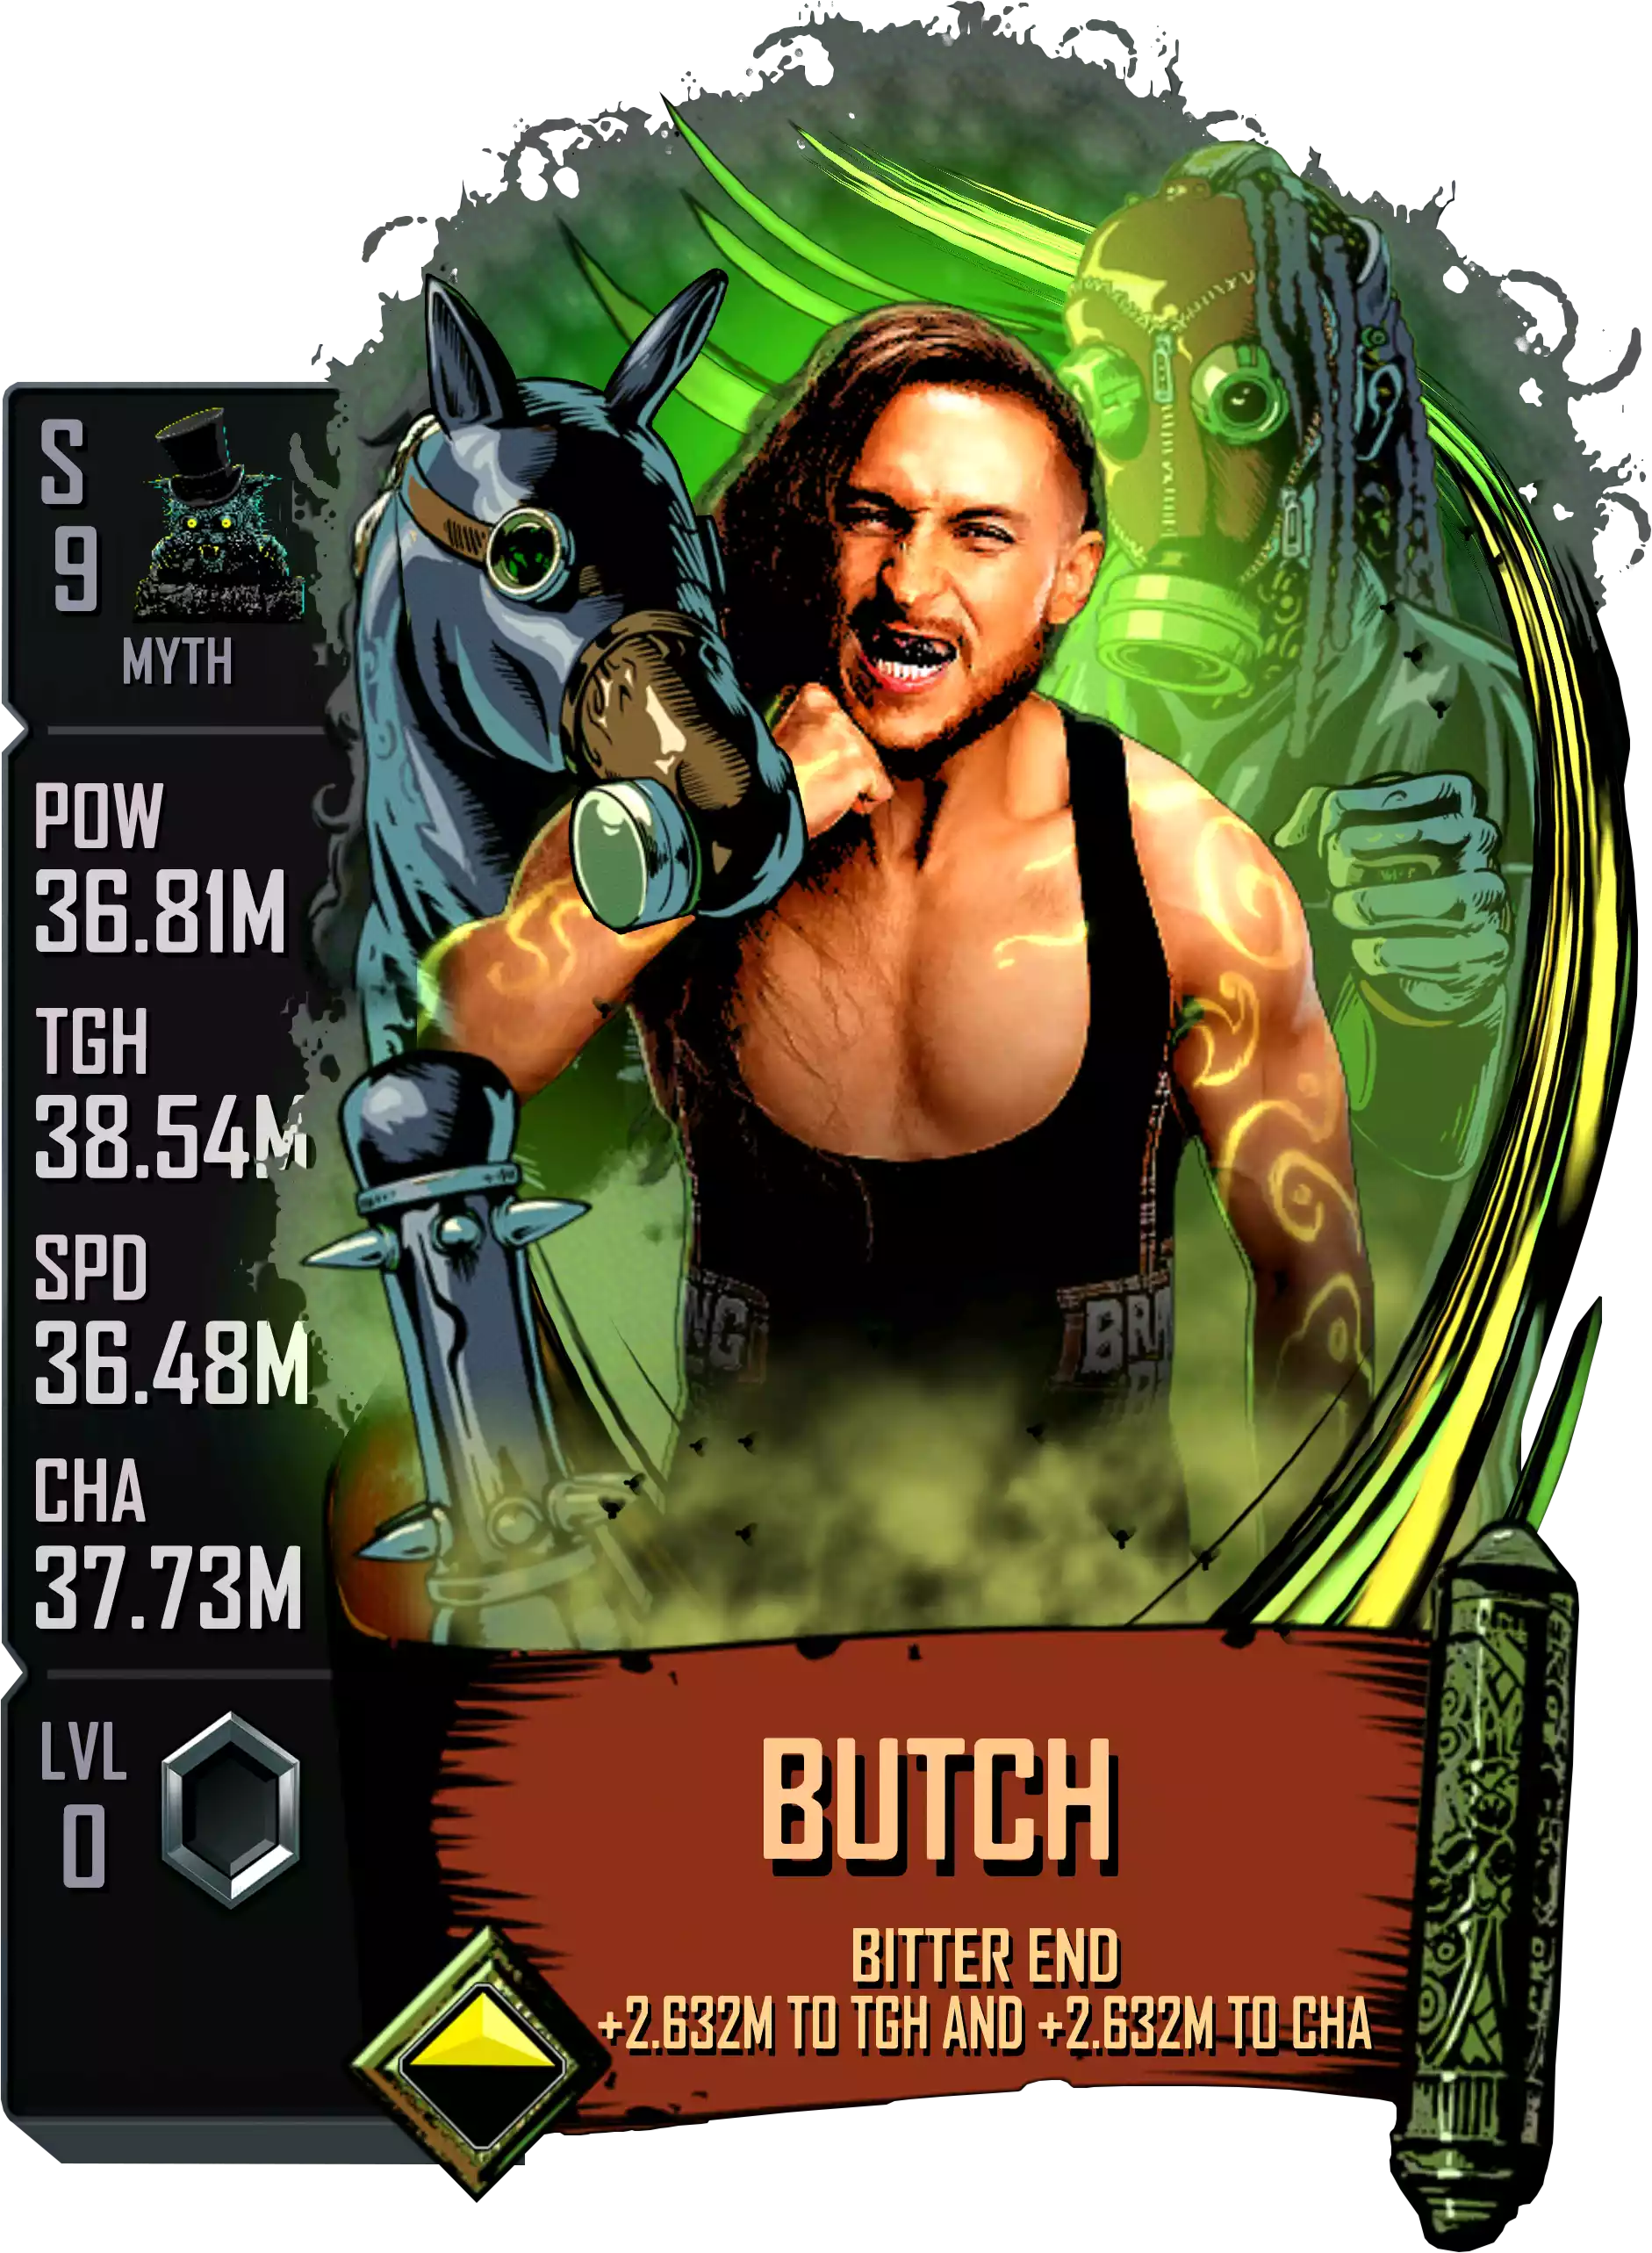 Myth - Butch Special Seasonal Halloween Card from WWE Supercard